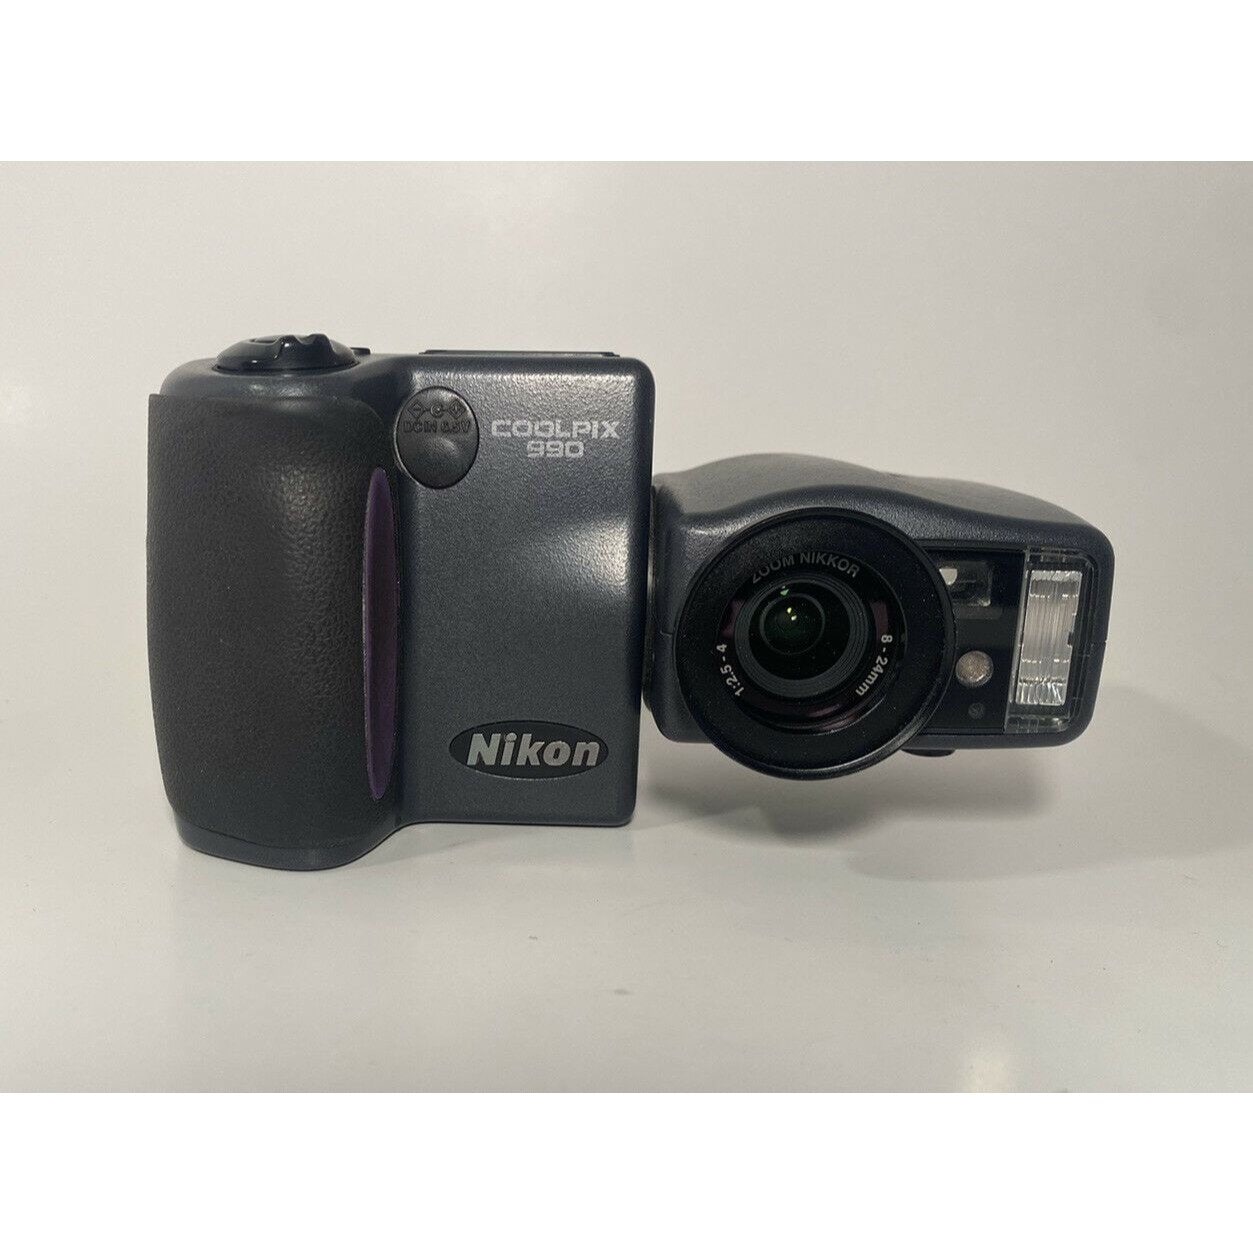 Nikon Coolpix 990 Camera